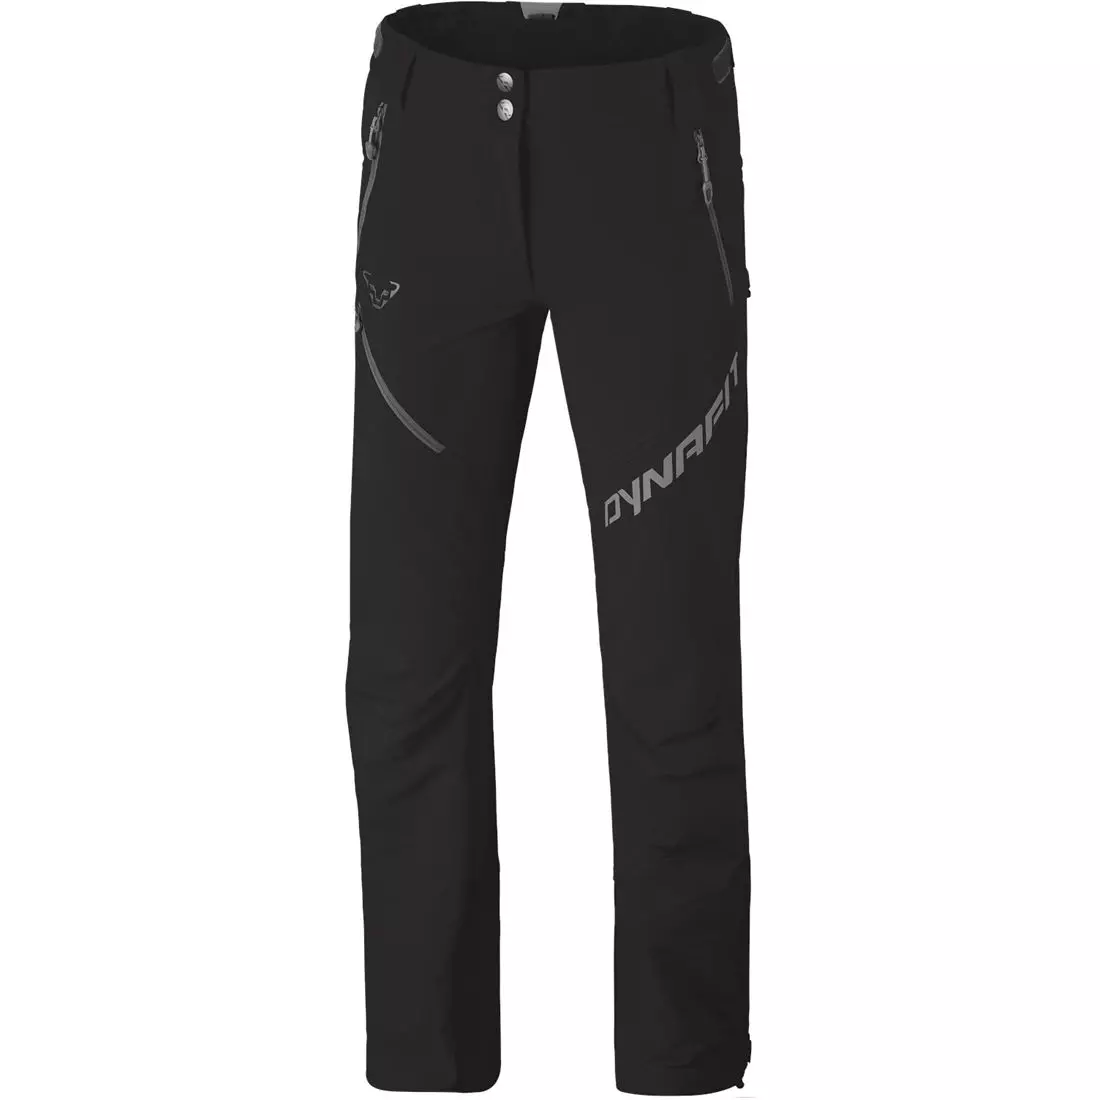 Pantaloni Mercury 2 DST black femei